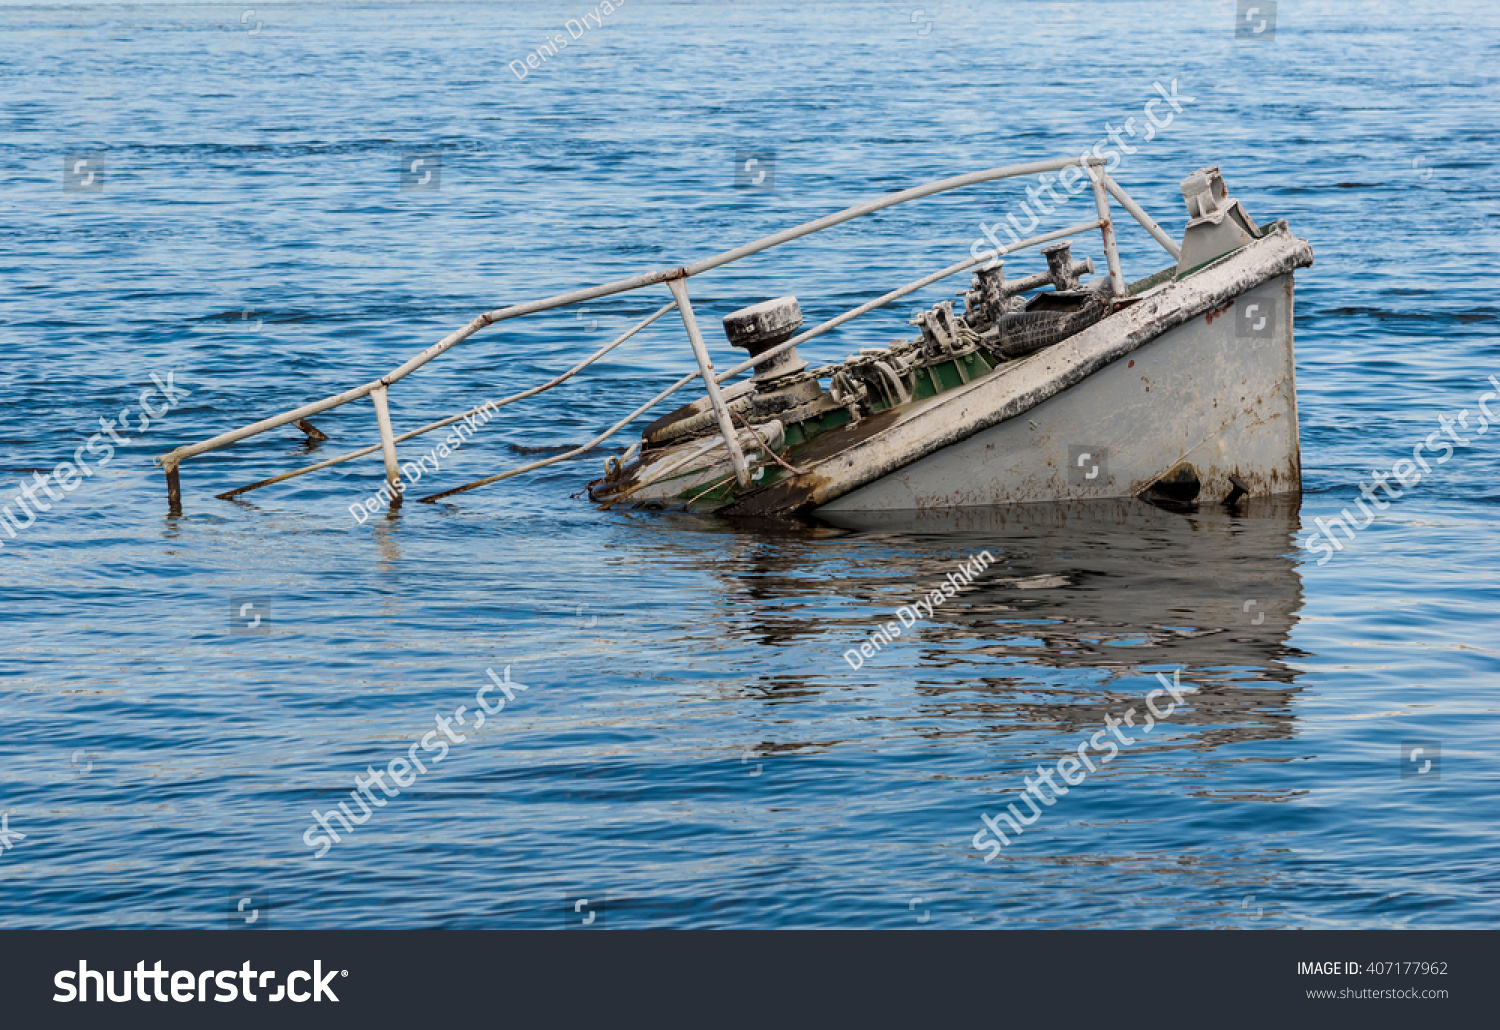 Rusty boat wreck in a blue river #407177962